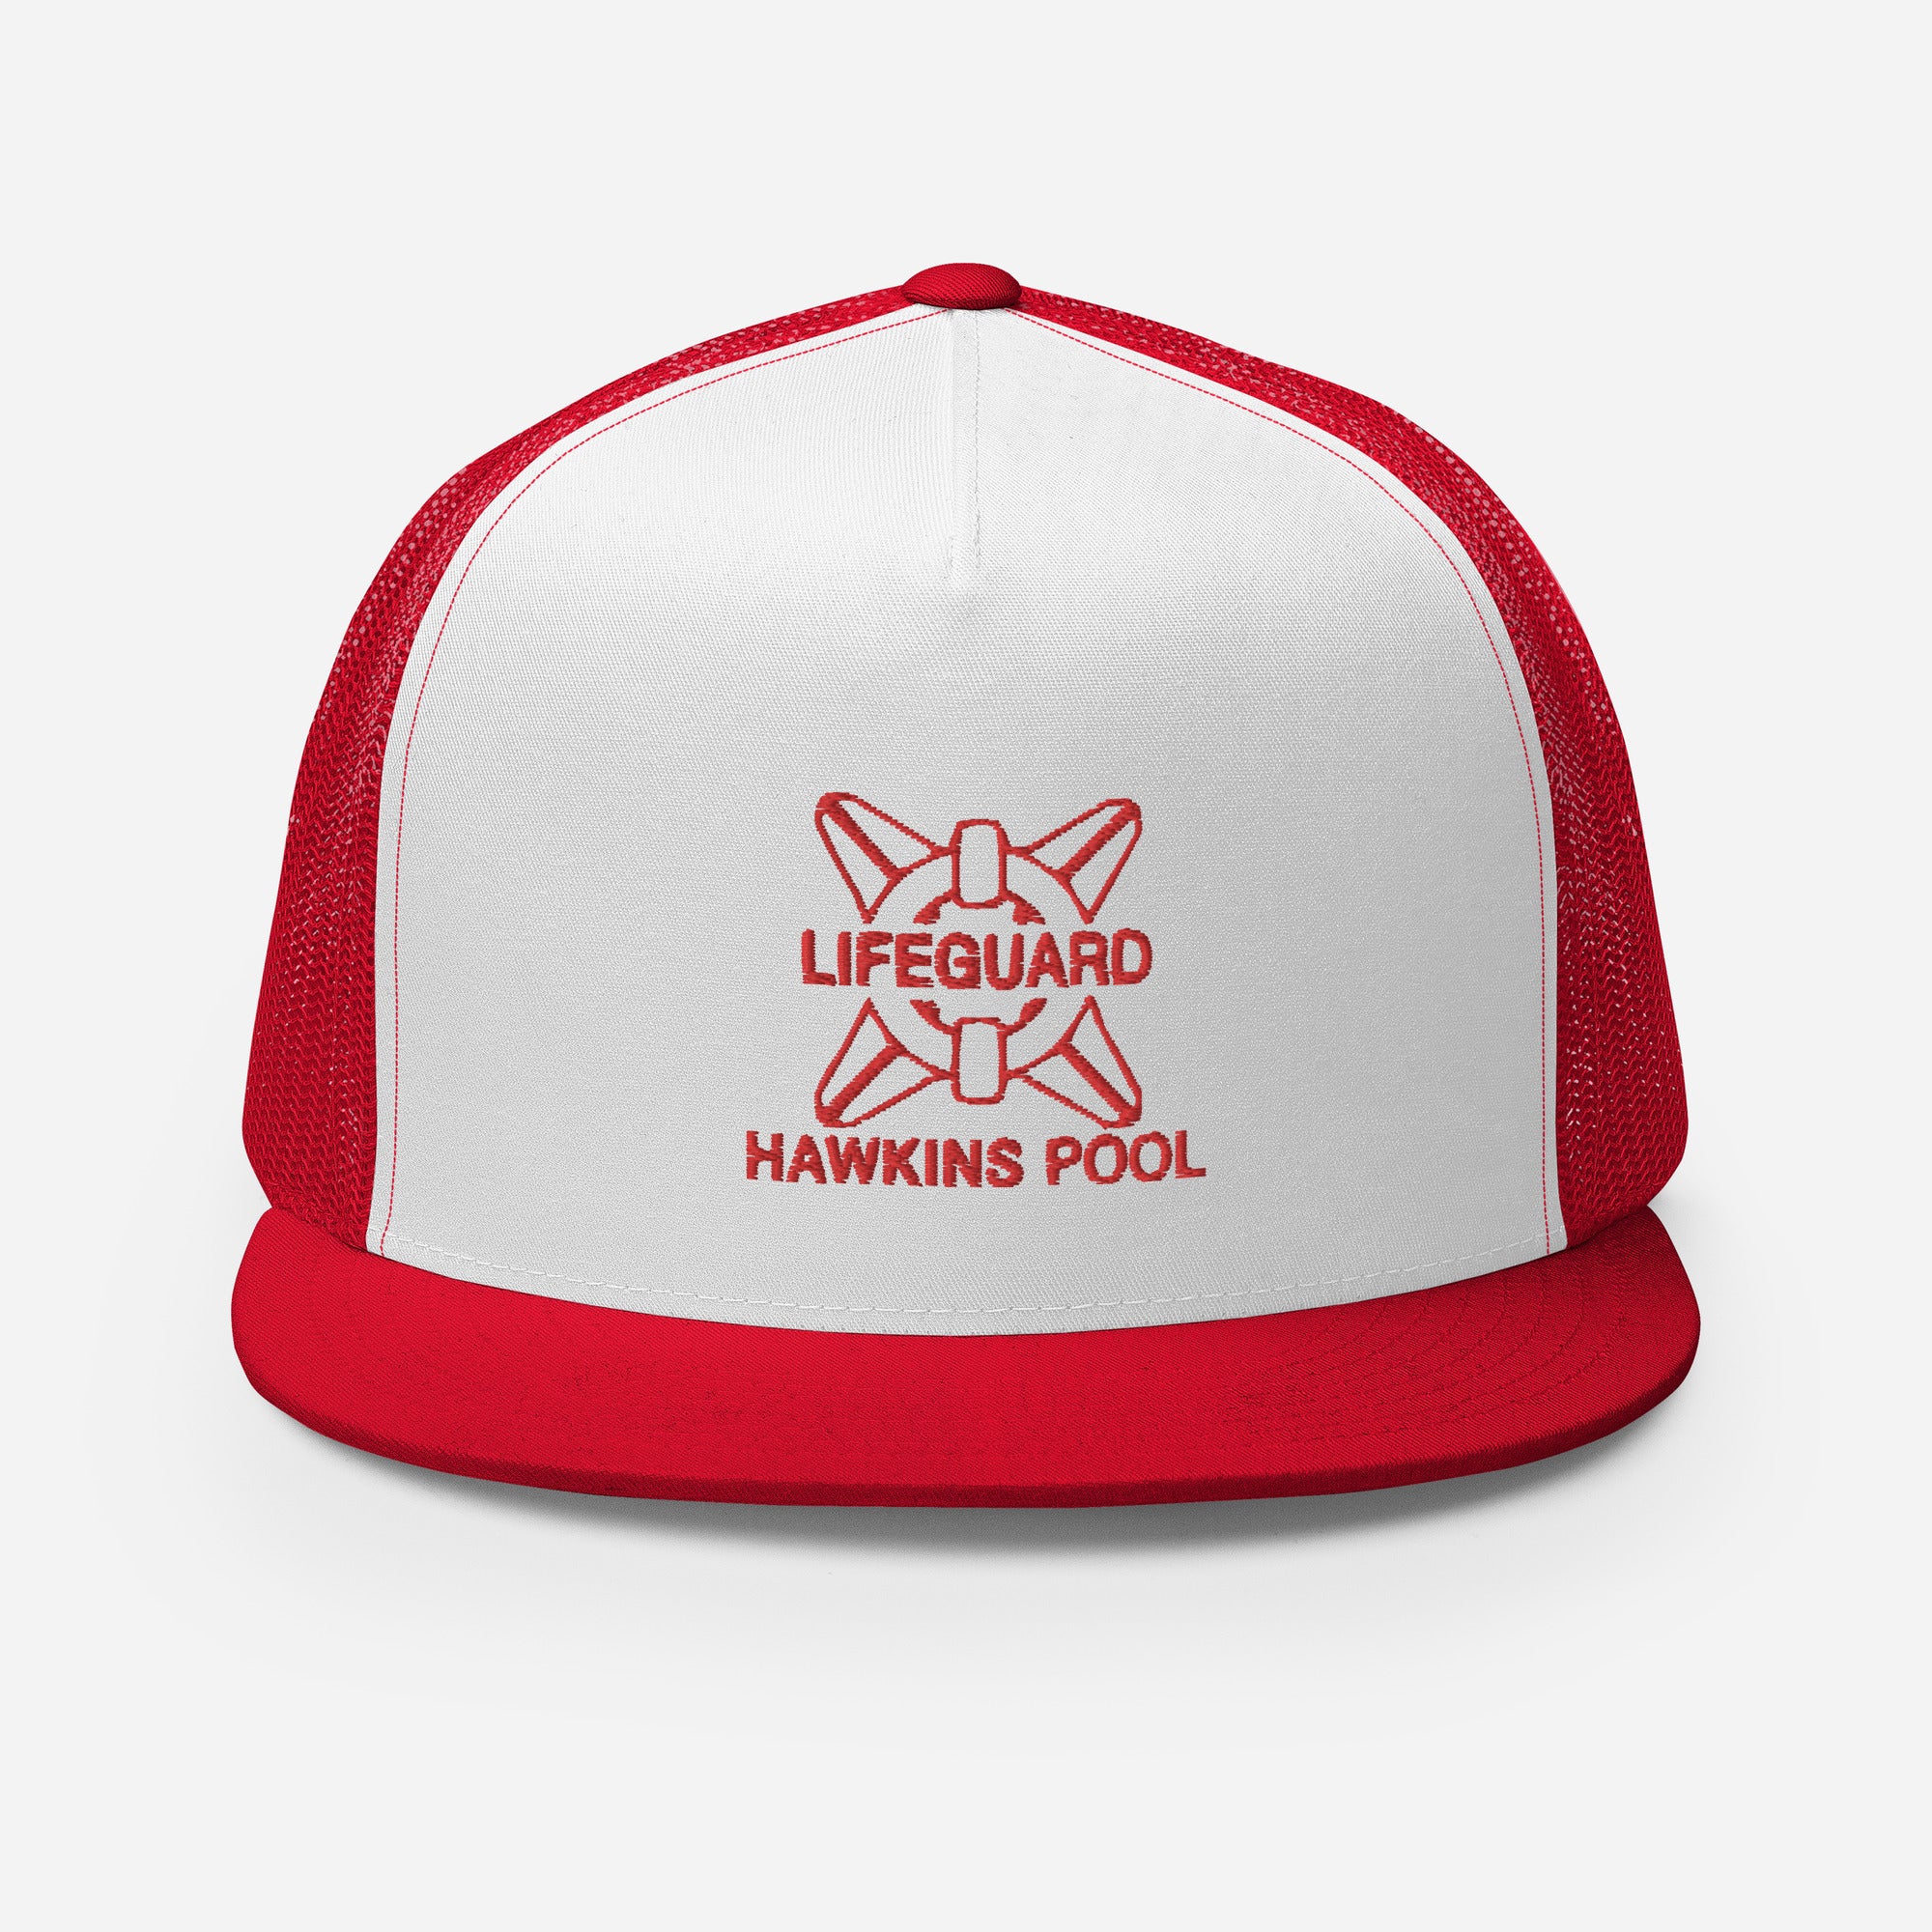 Hawkins Pool Lifeguard Embroidered Cap / Hat Uniform